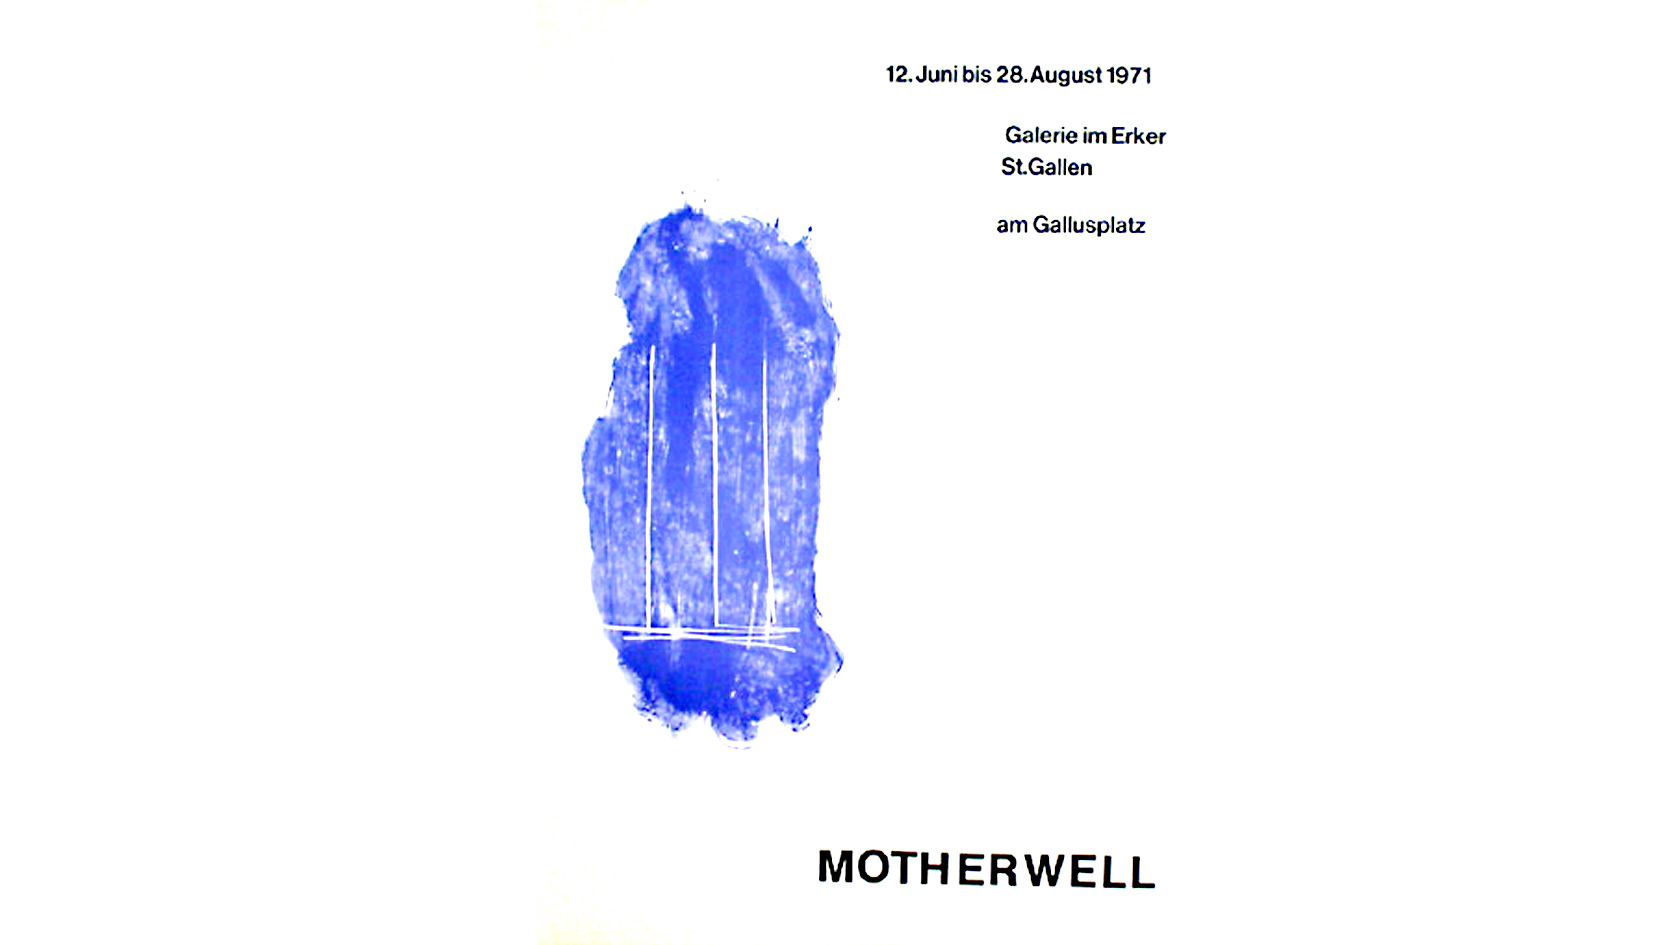 Robert Motherwell: Erker Galerie, 1971